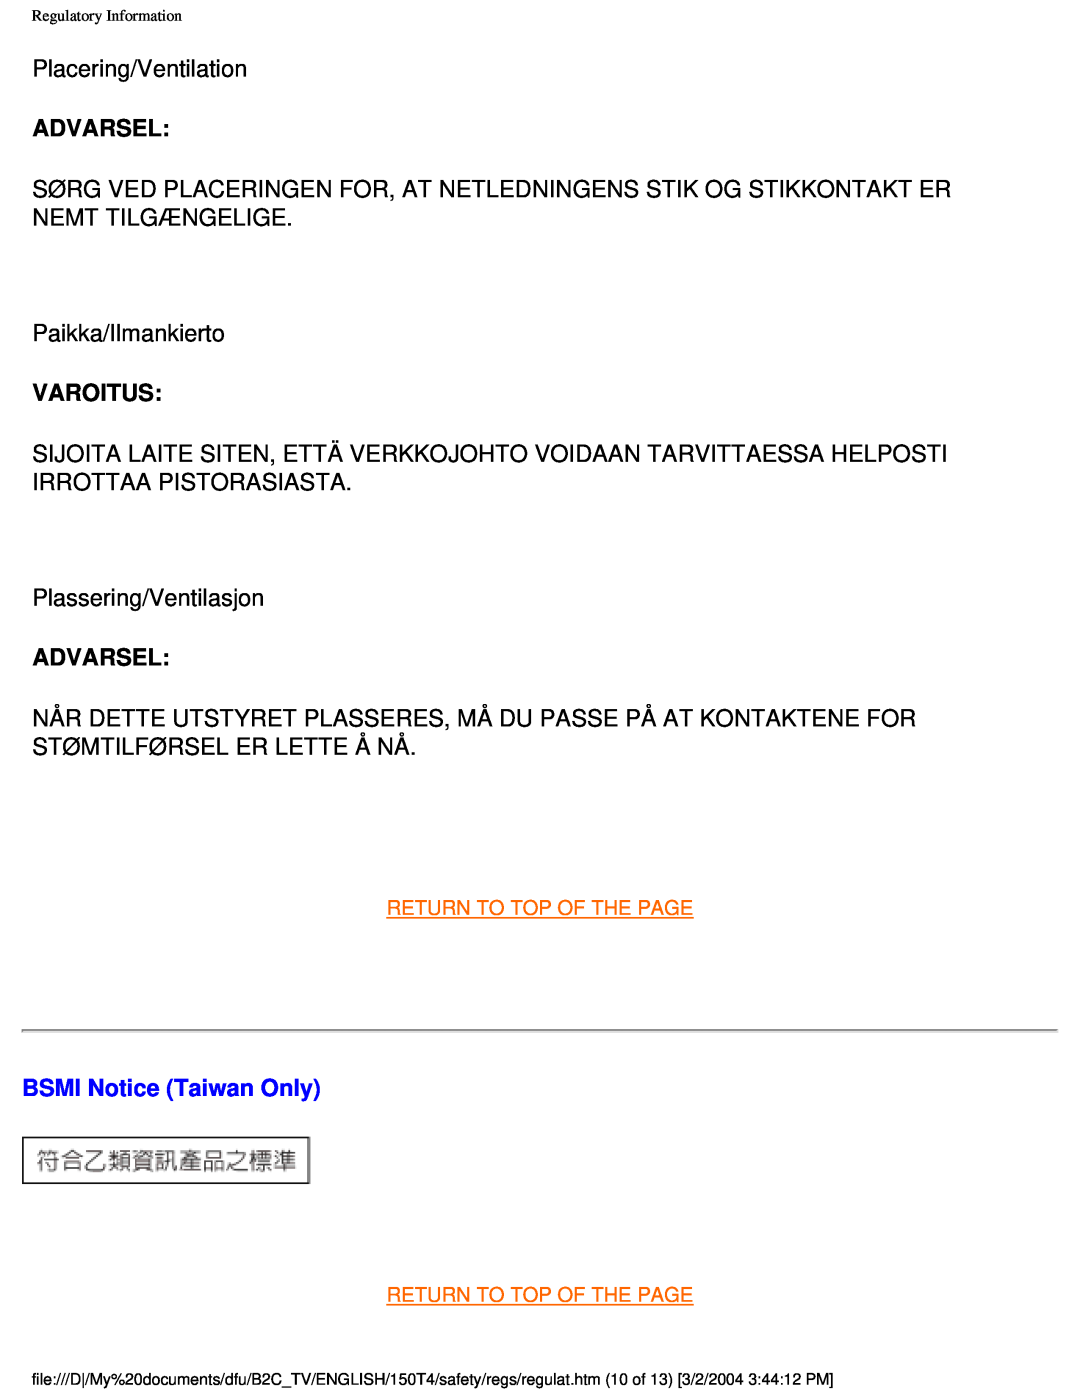 Philips 150T4 manual Advarsel, Varoitus, BSMI Notice Taiwan Only 